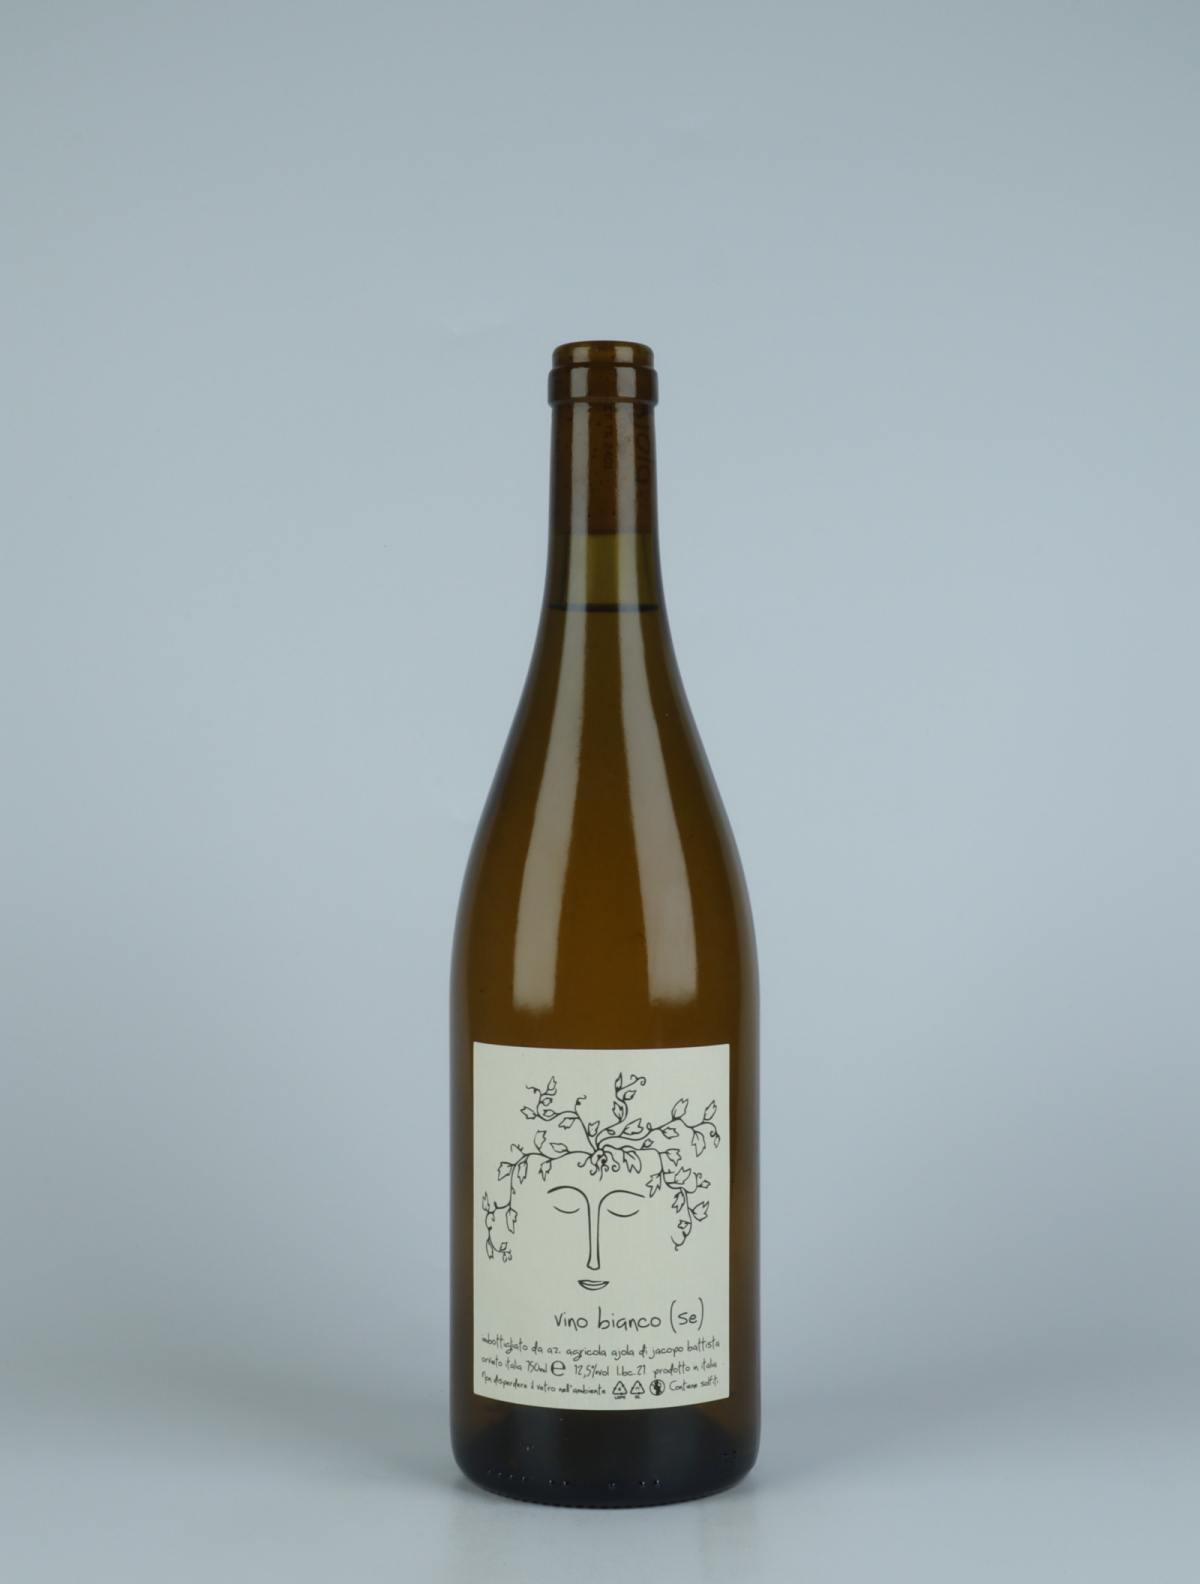 A bottle 2021 Vino Bianco (Se) Orange wine from Ajola, Umbria in Italy